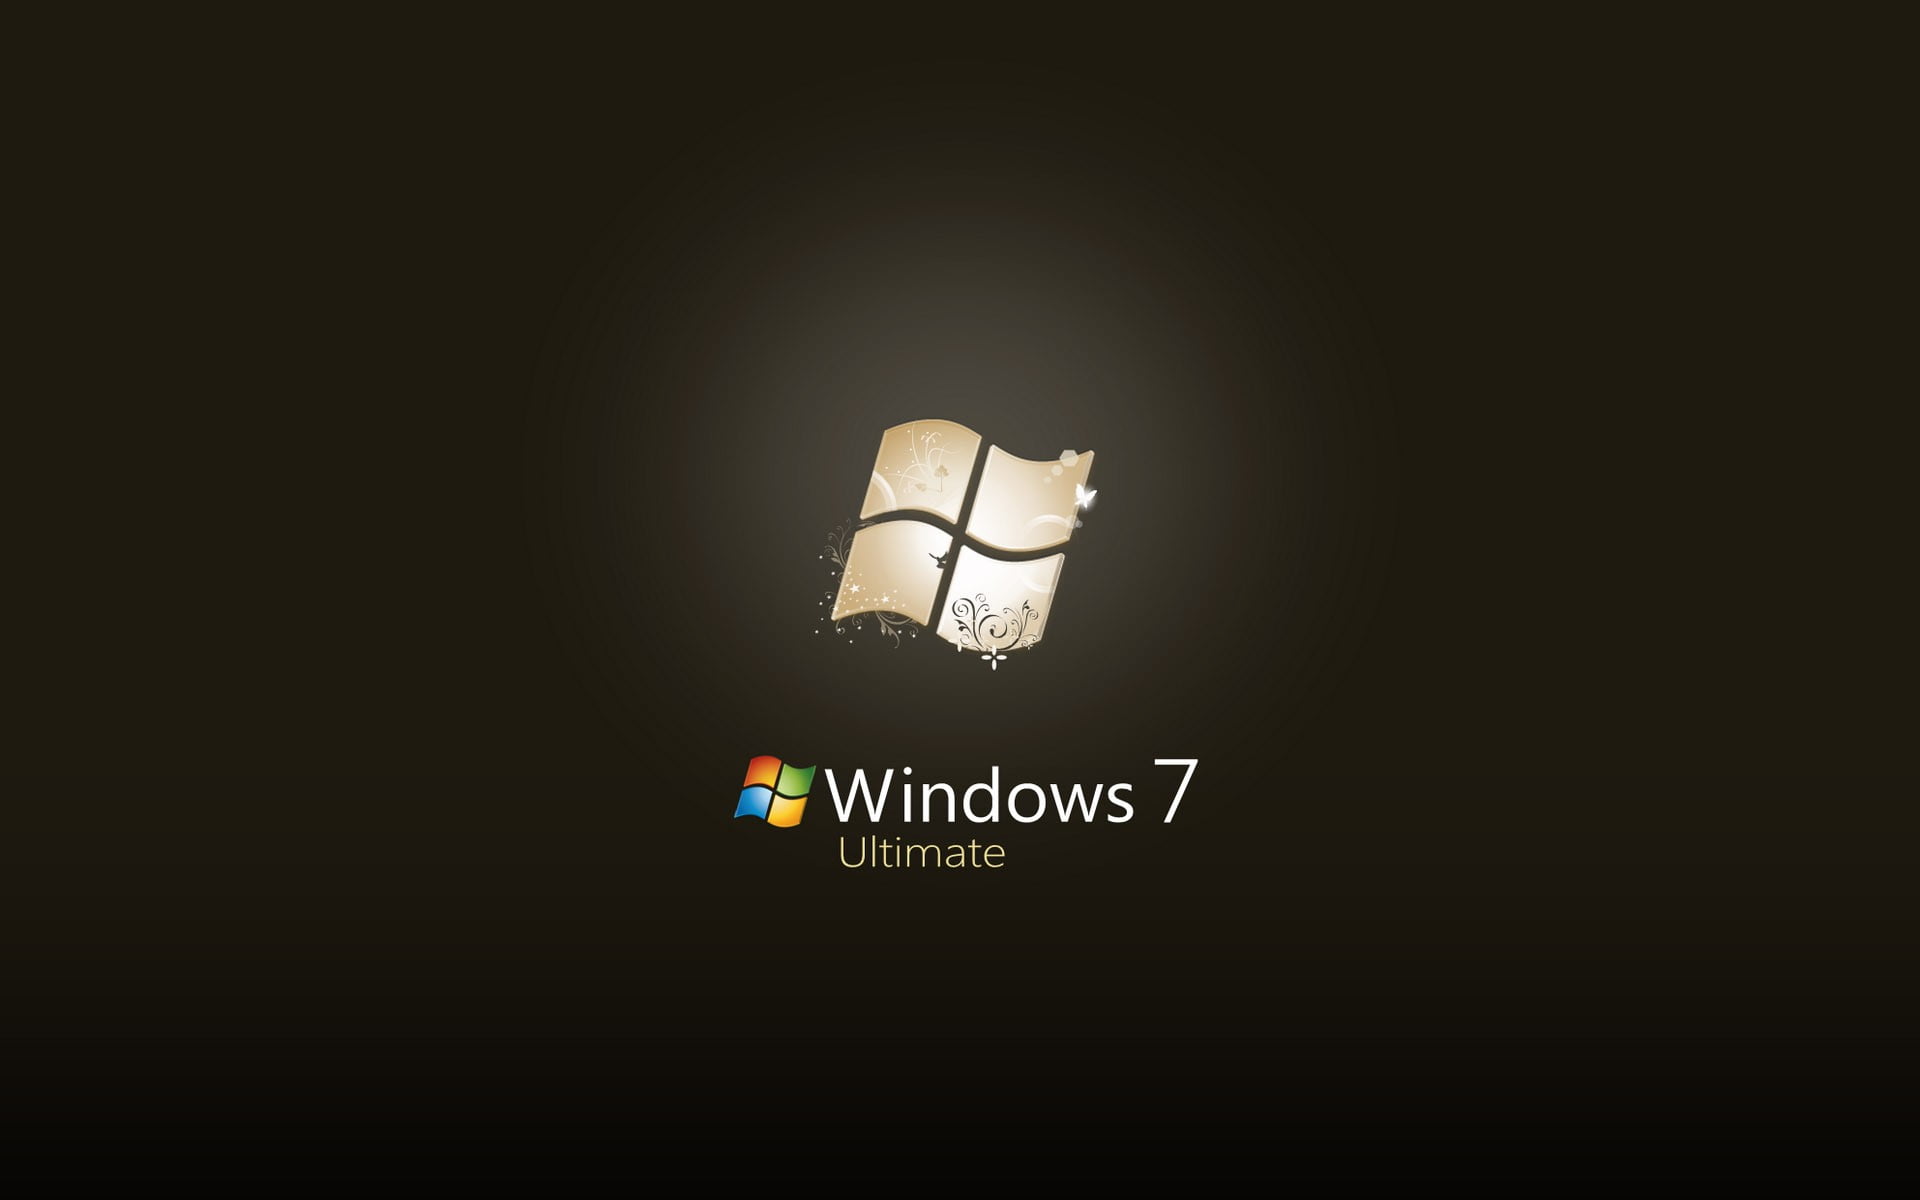 Windows 7 Ultimate logo illustration, Windows 7, operating systems, Microsoft Windows